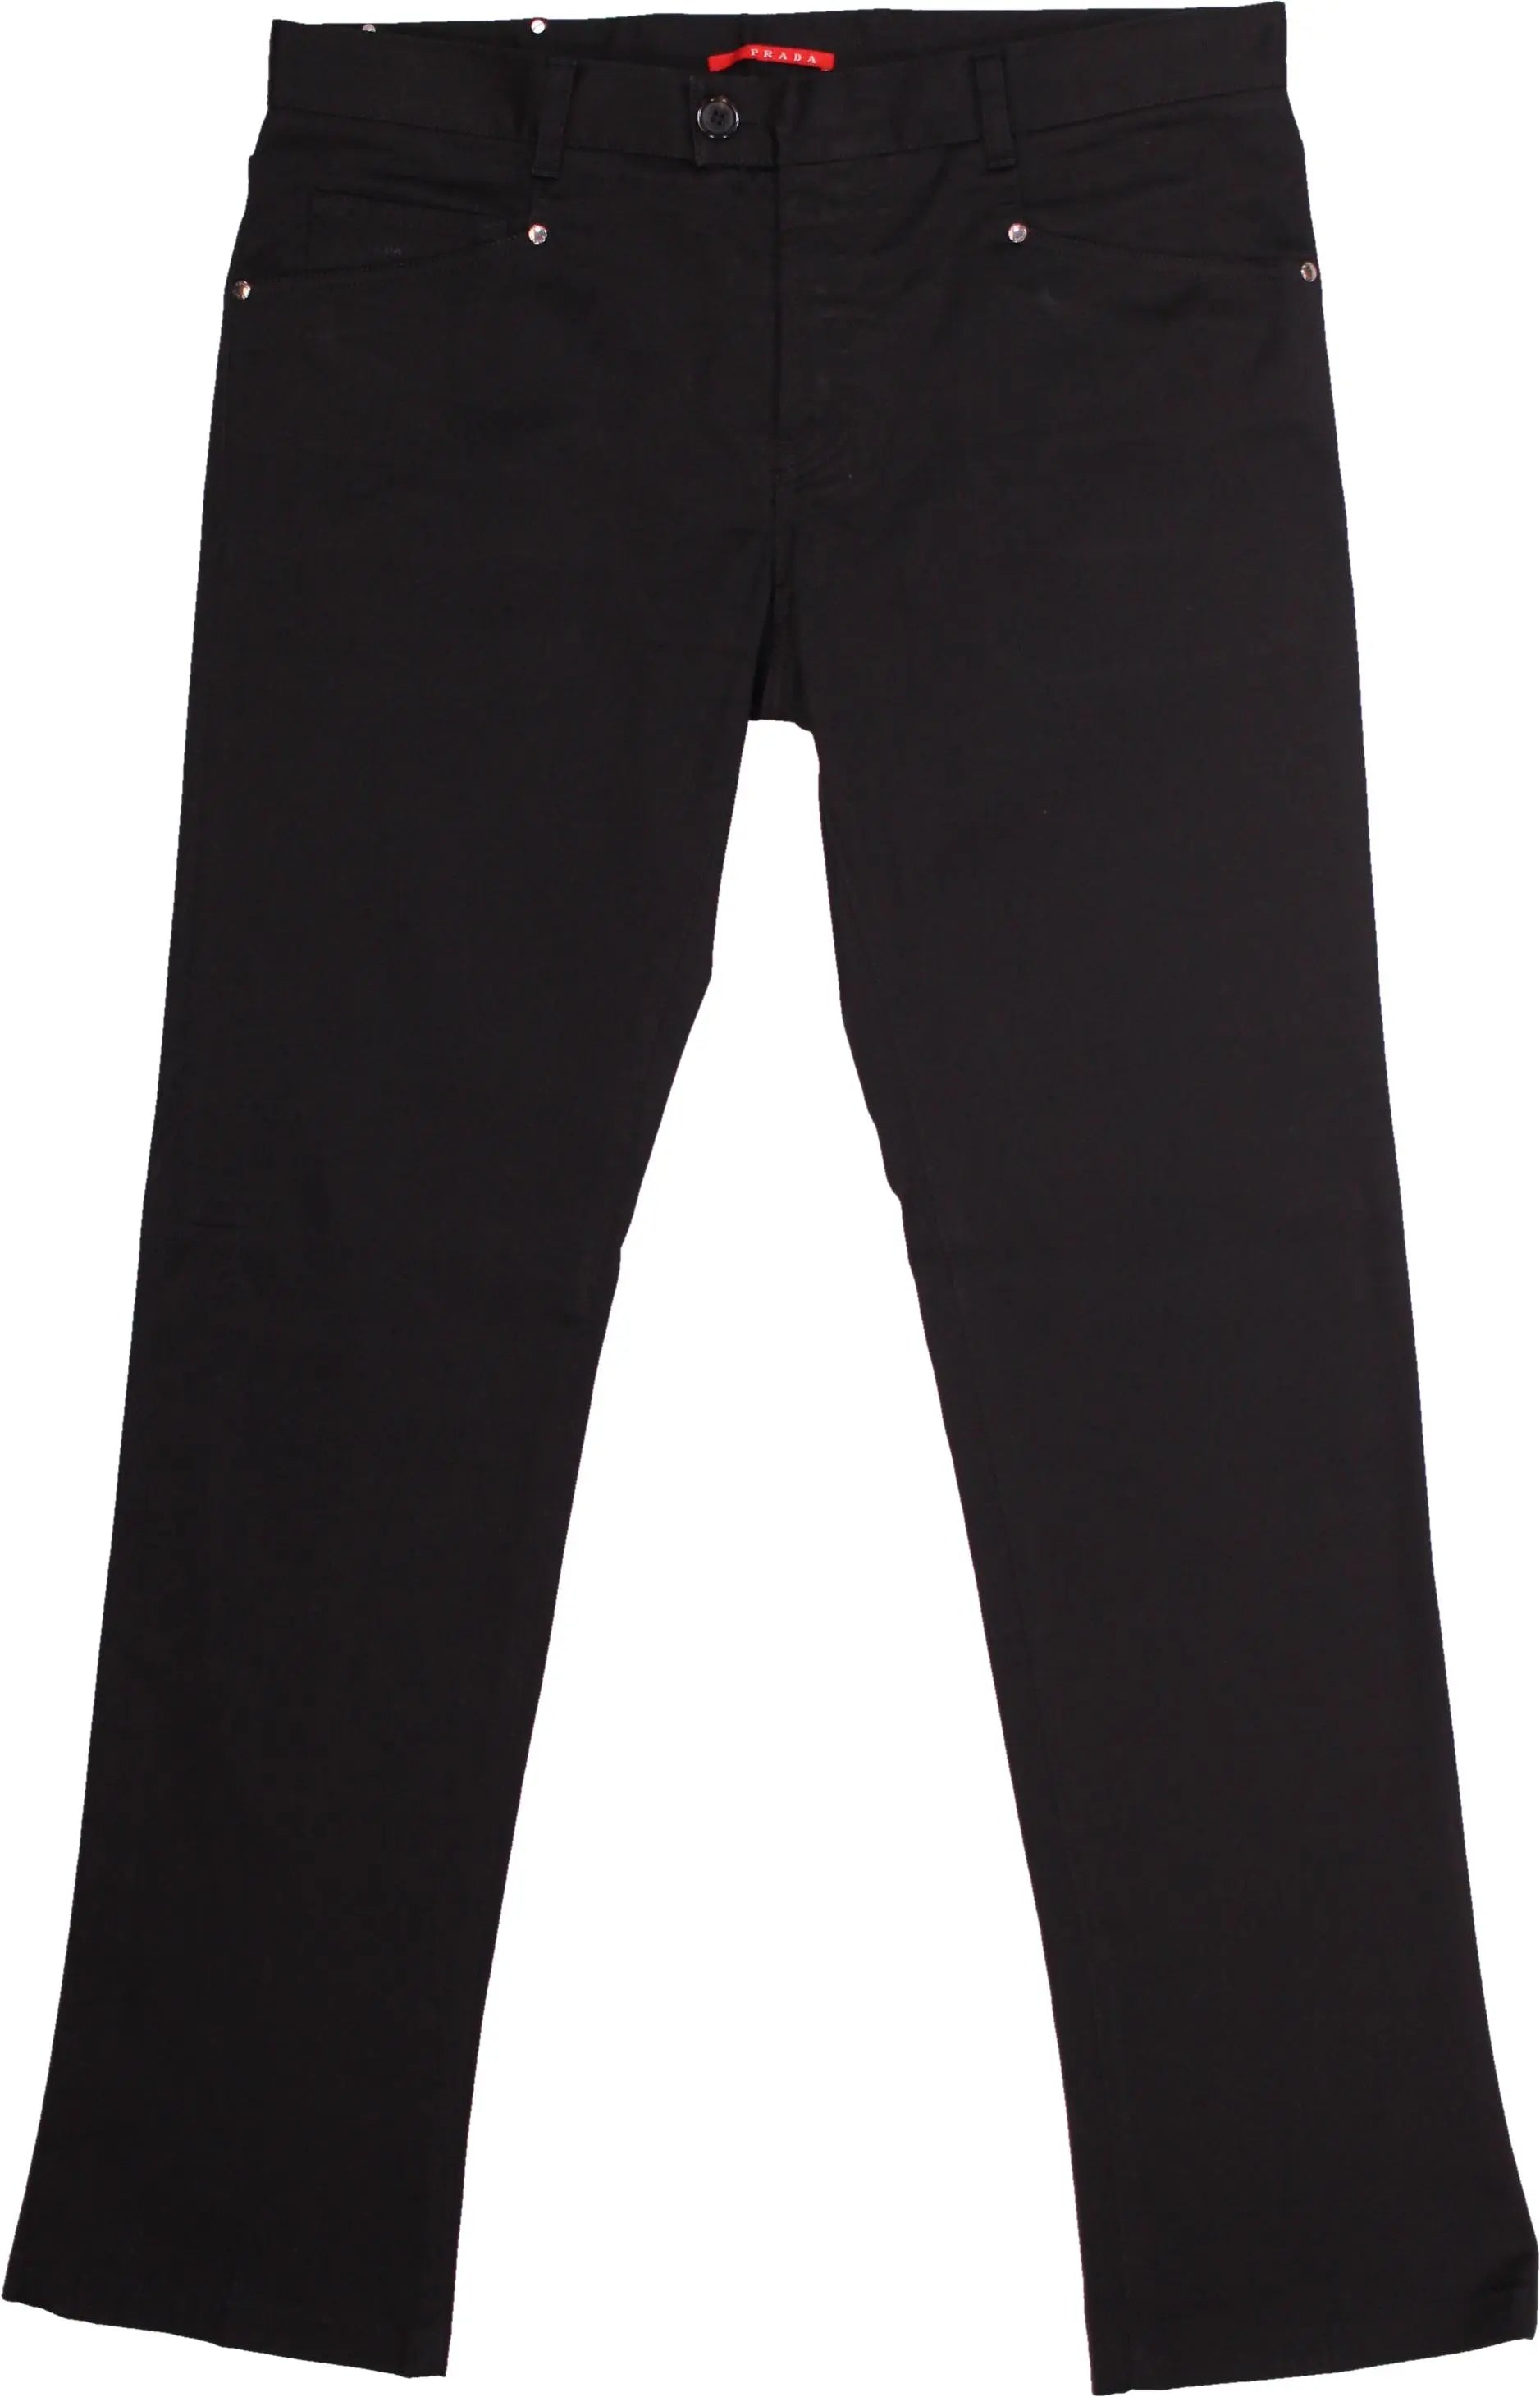 Prada - Black Pants by Prada- ThriftTale.com - Vintage and second handclothing